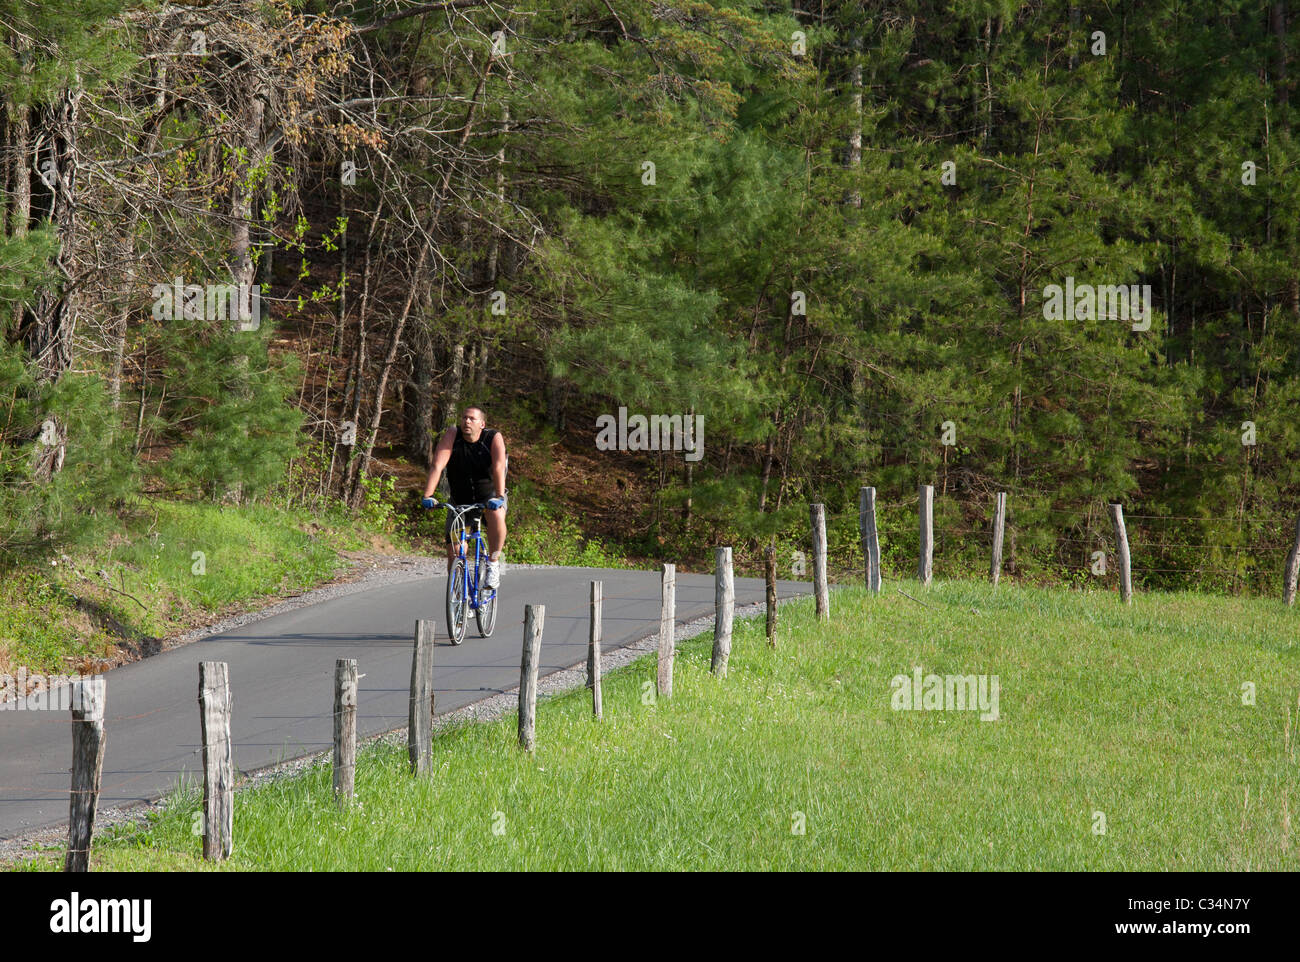 Great Smoky Mountains National Park, Tennessee - ciclista en una carretera en Cades Cove. Foto de stock